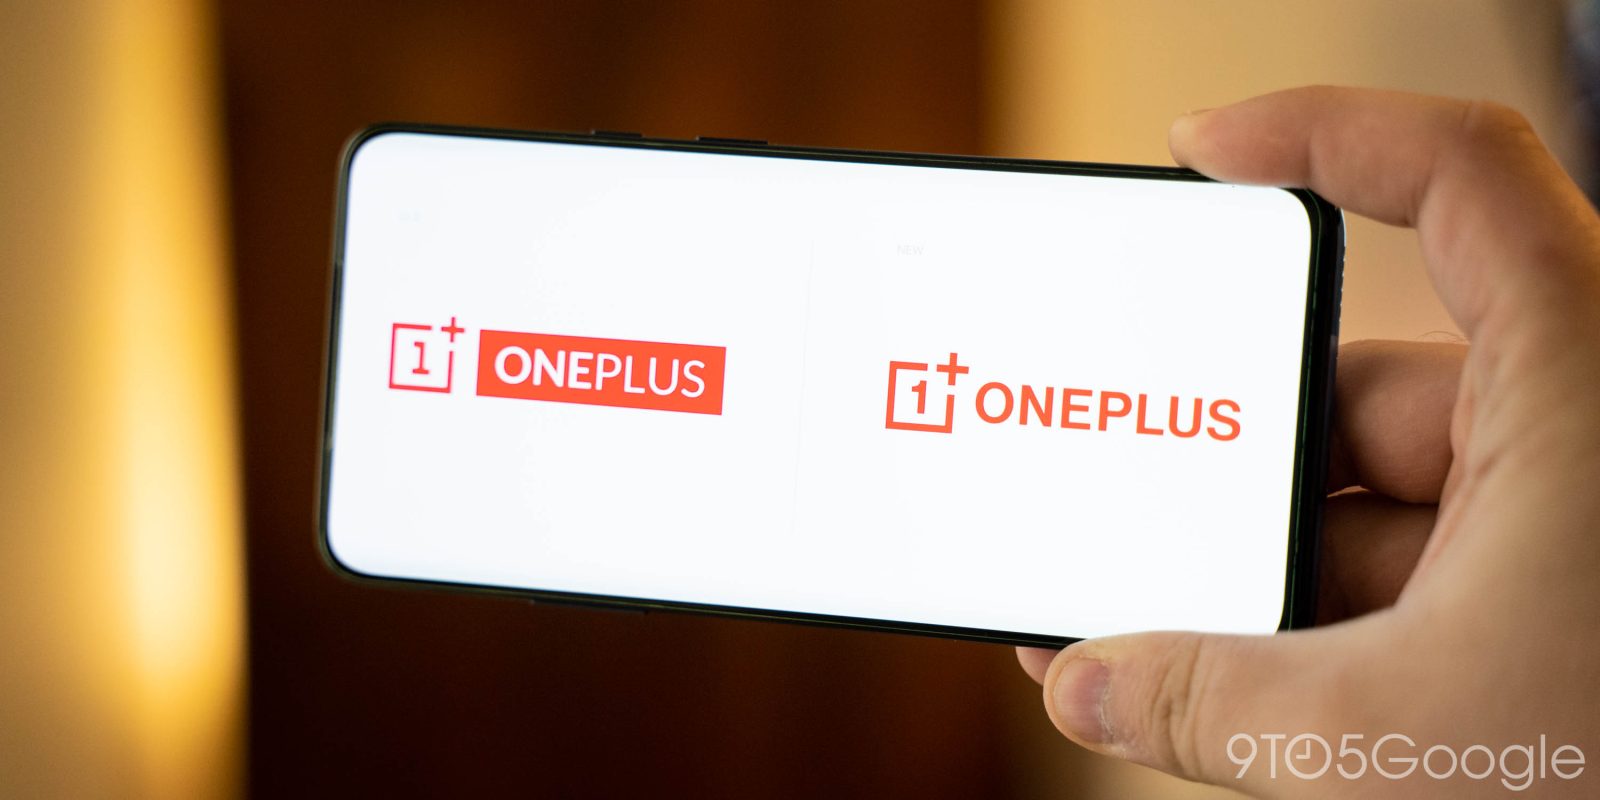 oneplus new logo